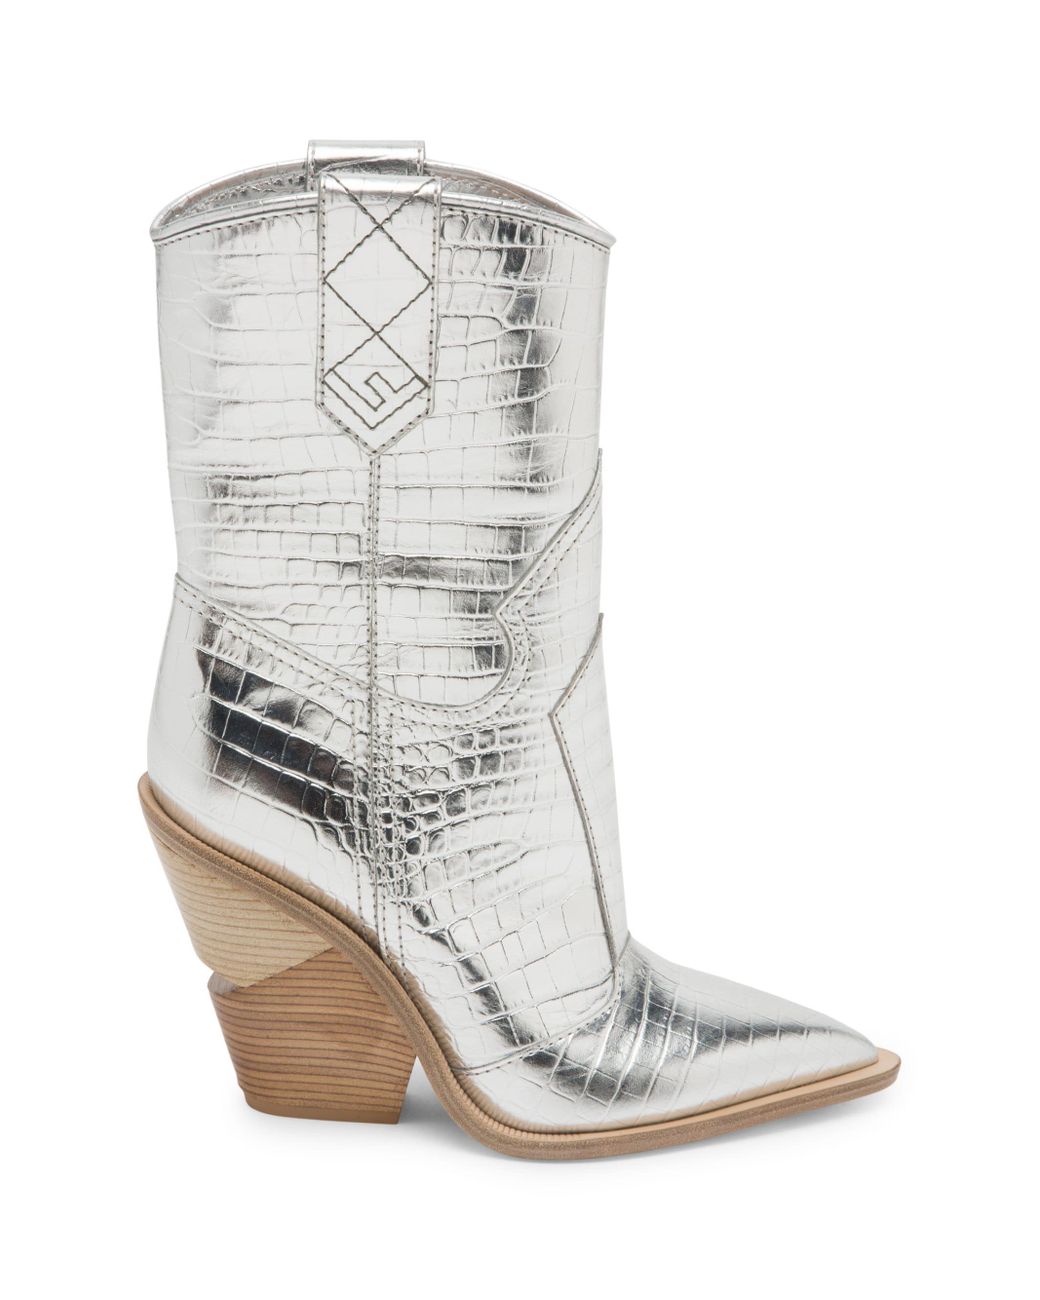 Fendi Women's Metallic Cowboy Boots - Silver | Lyst